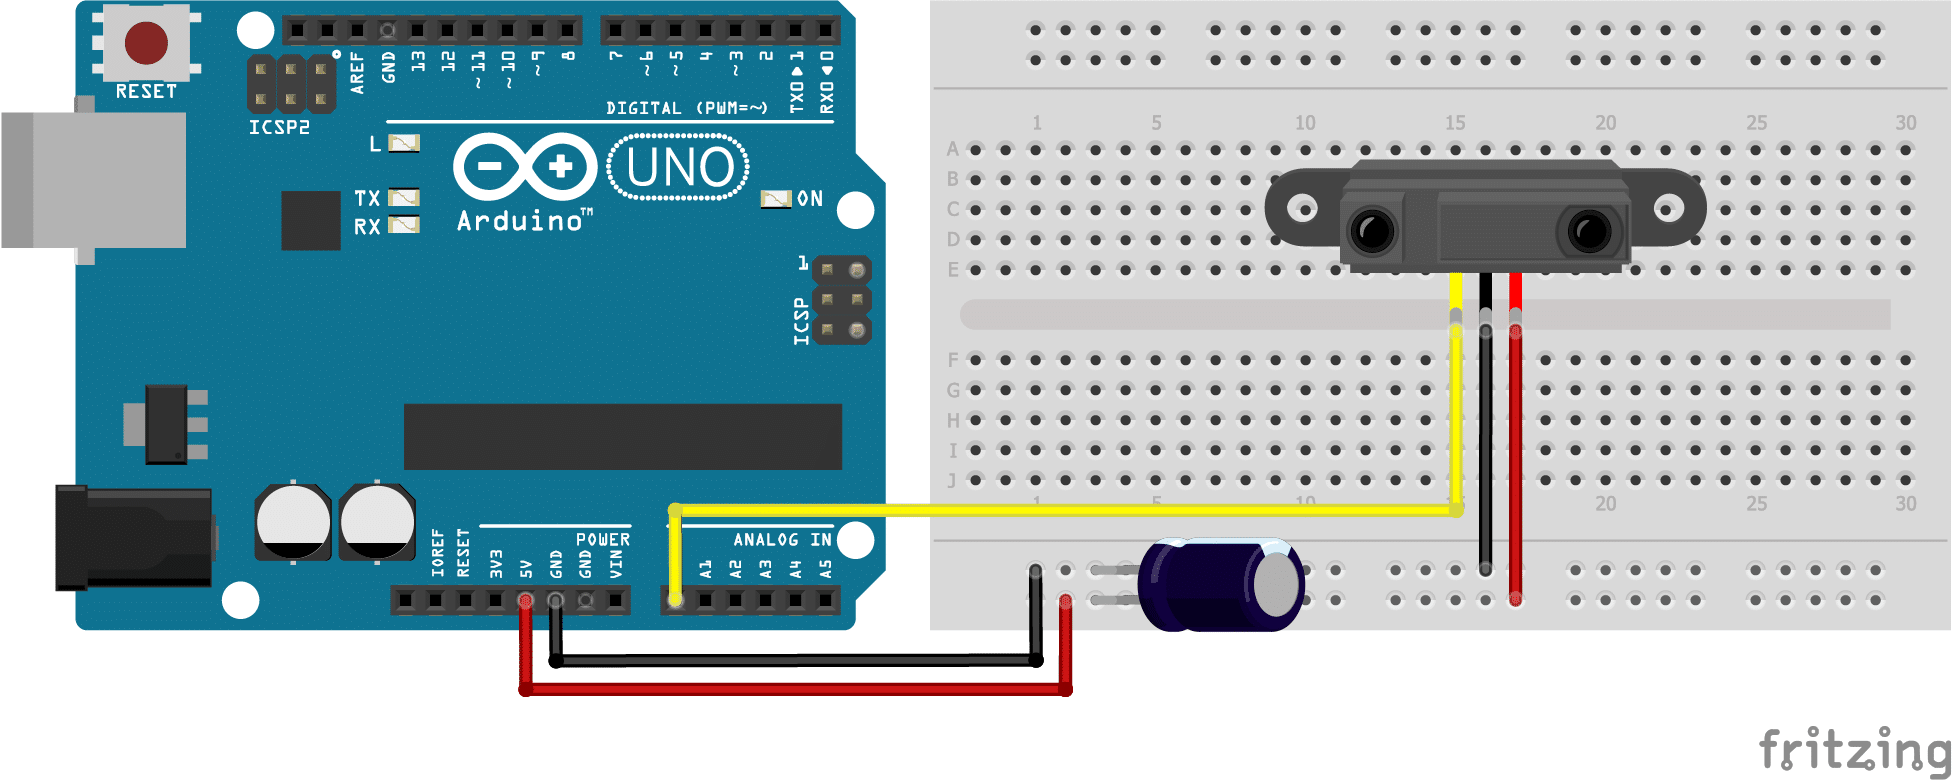 How To Use Sharp Ir Distance Sensor With Arduino